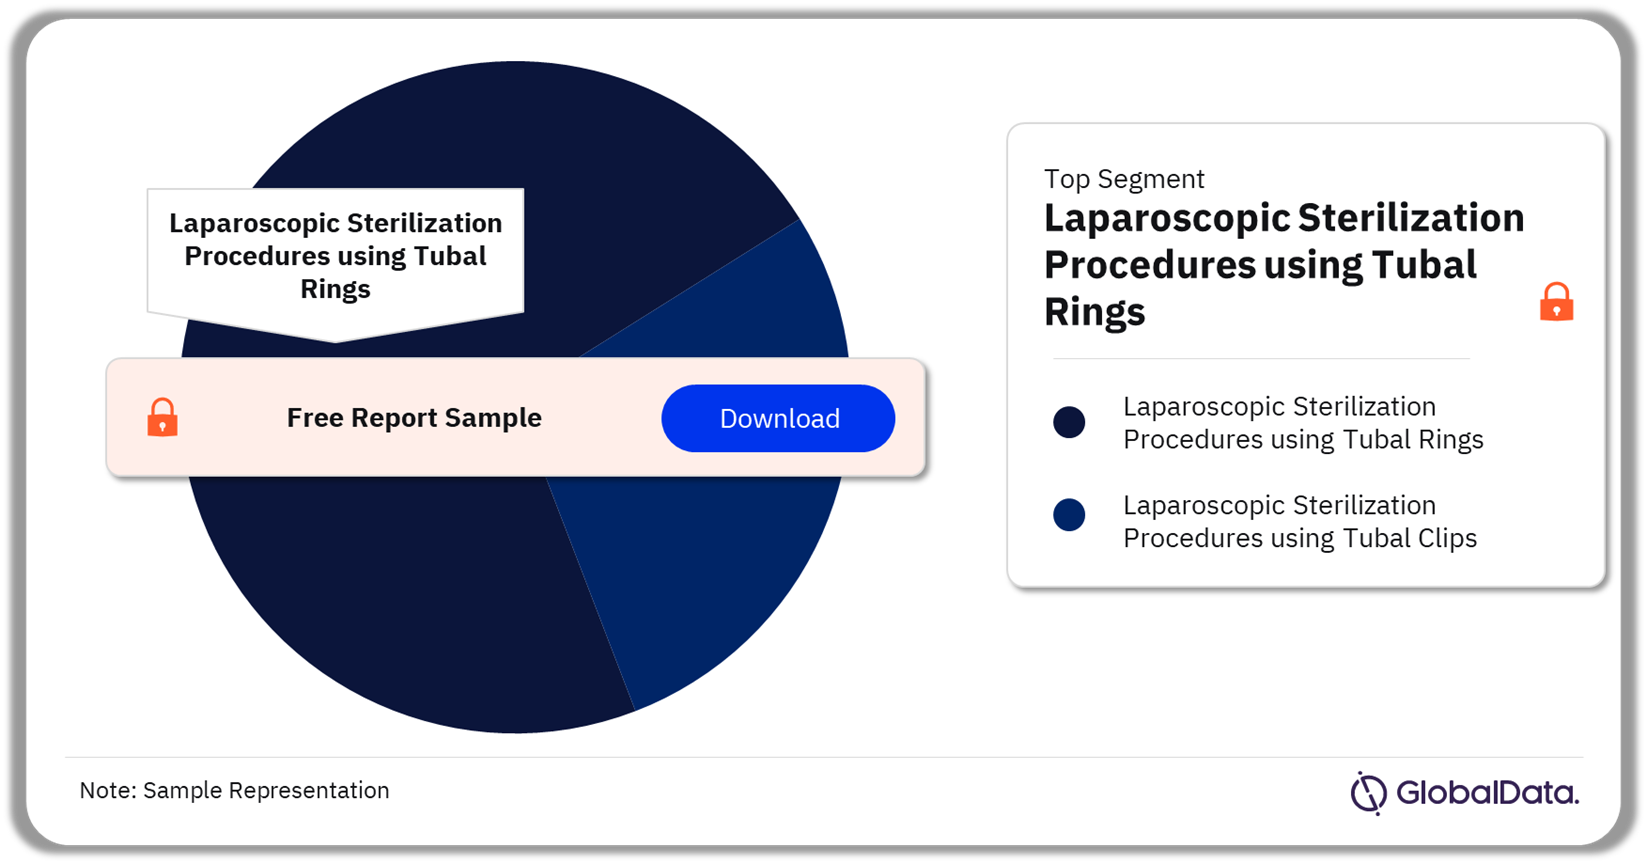 BRIC Laparoscopic Sterilization Procedures Market Analysis by Segments, 2022 (%)